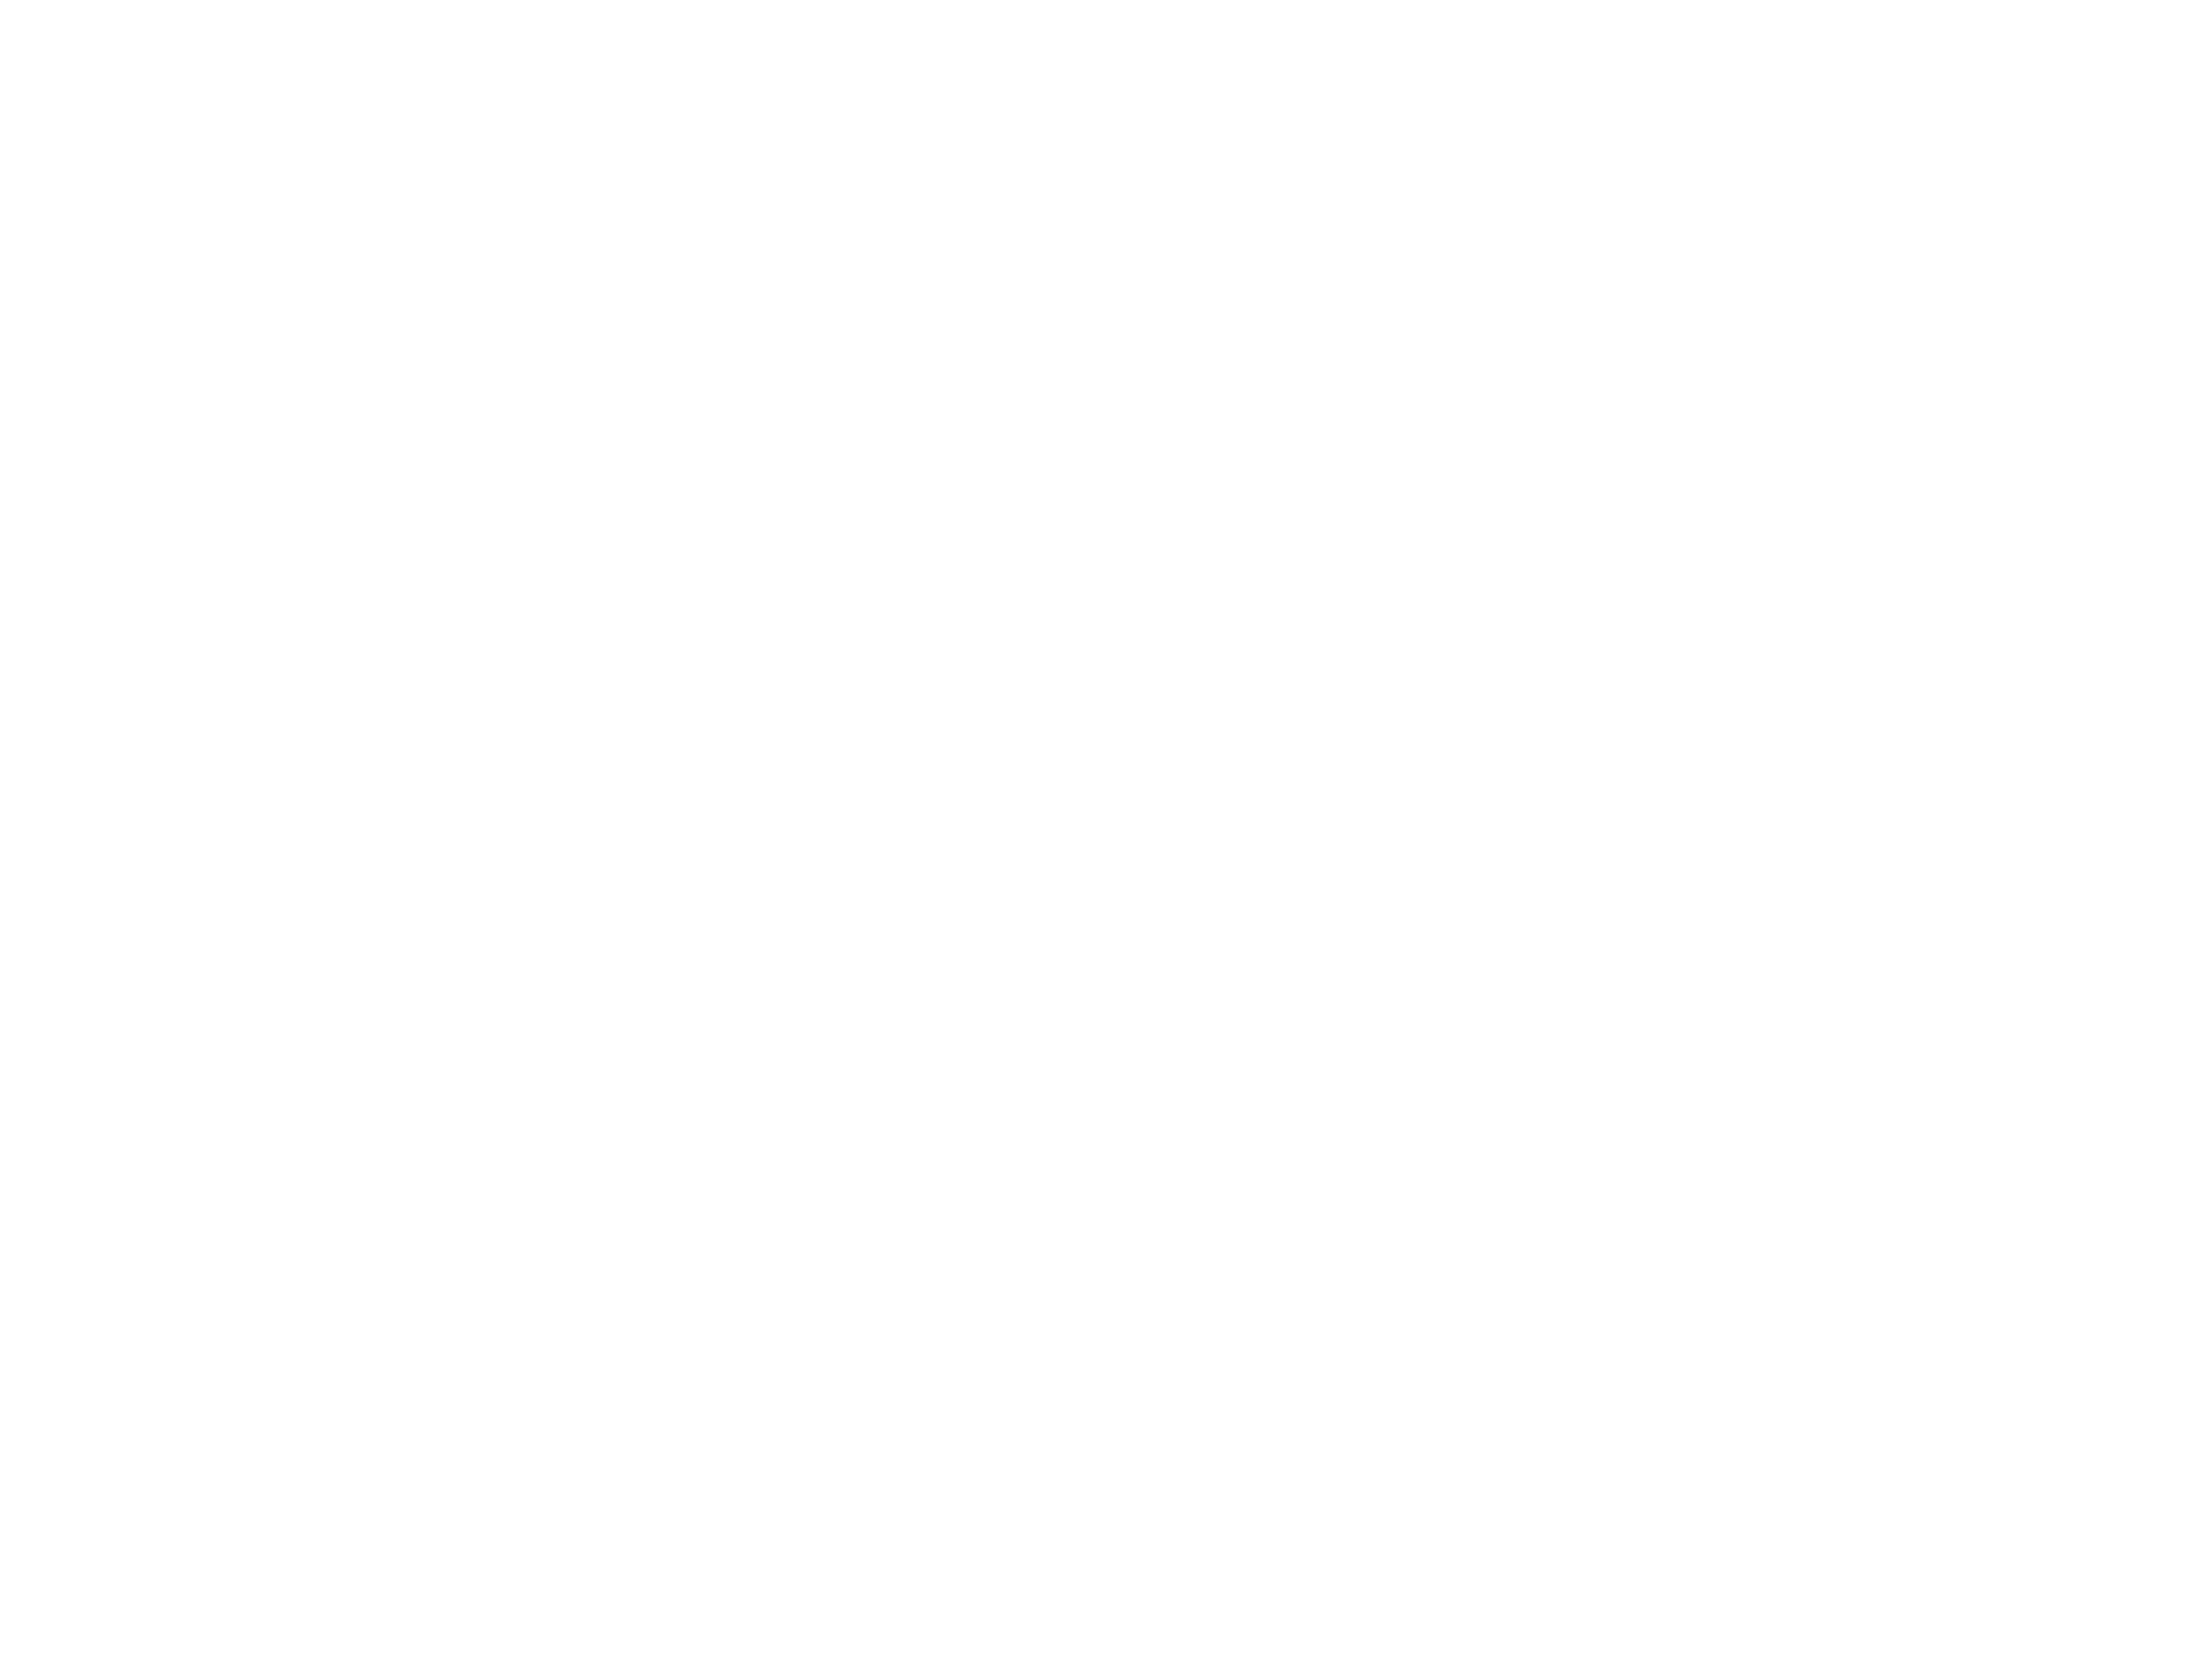 national runaway safeline logo white